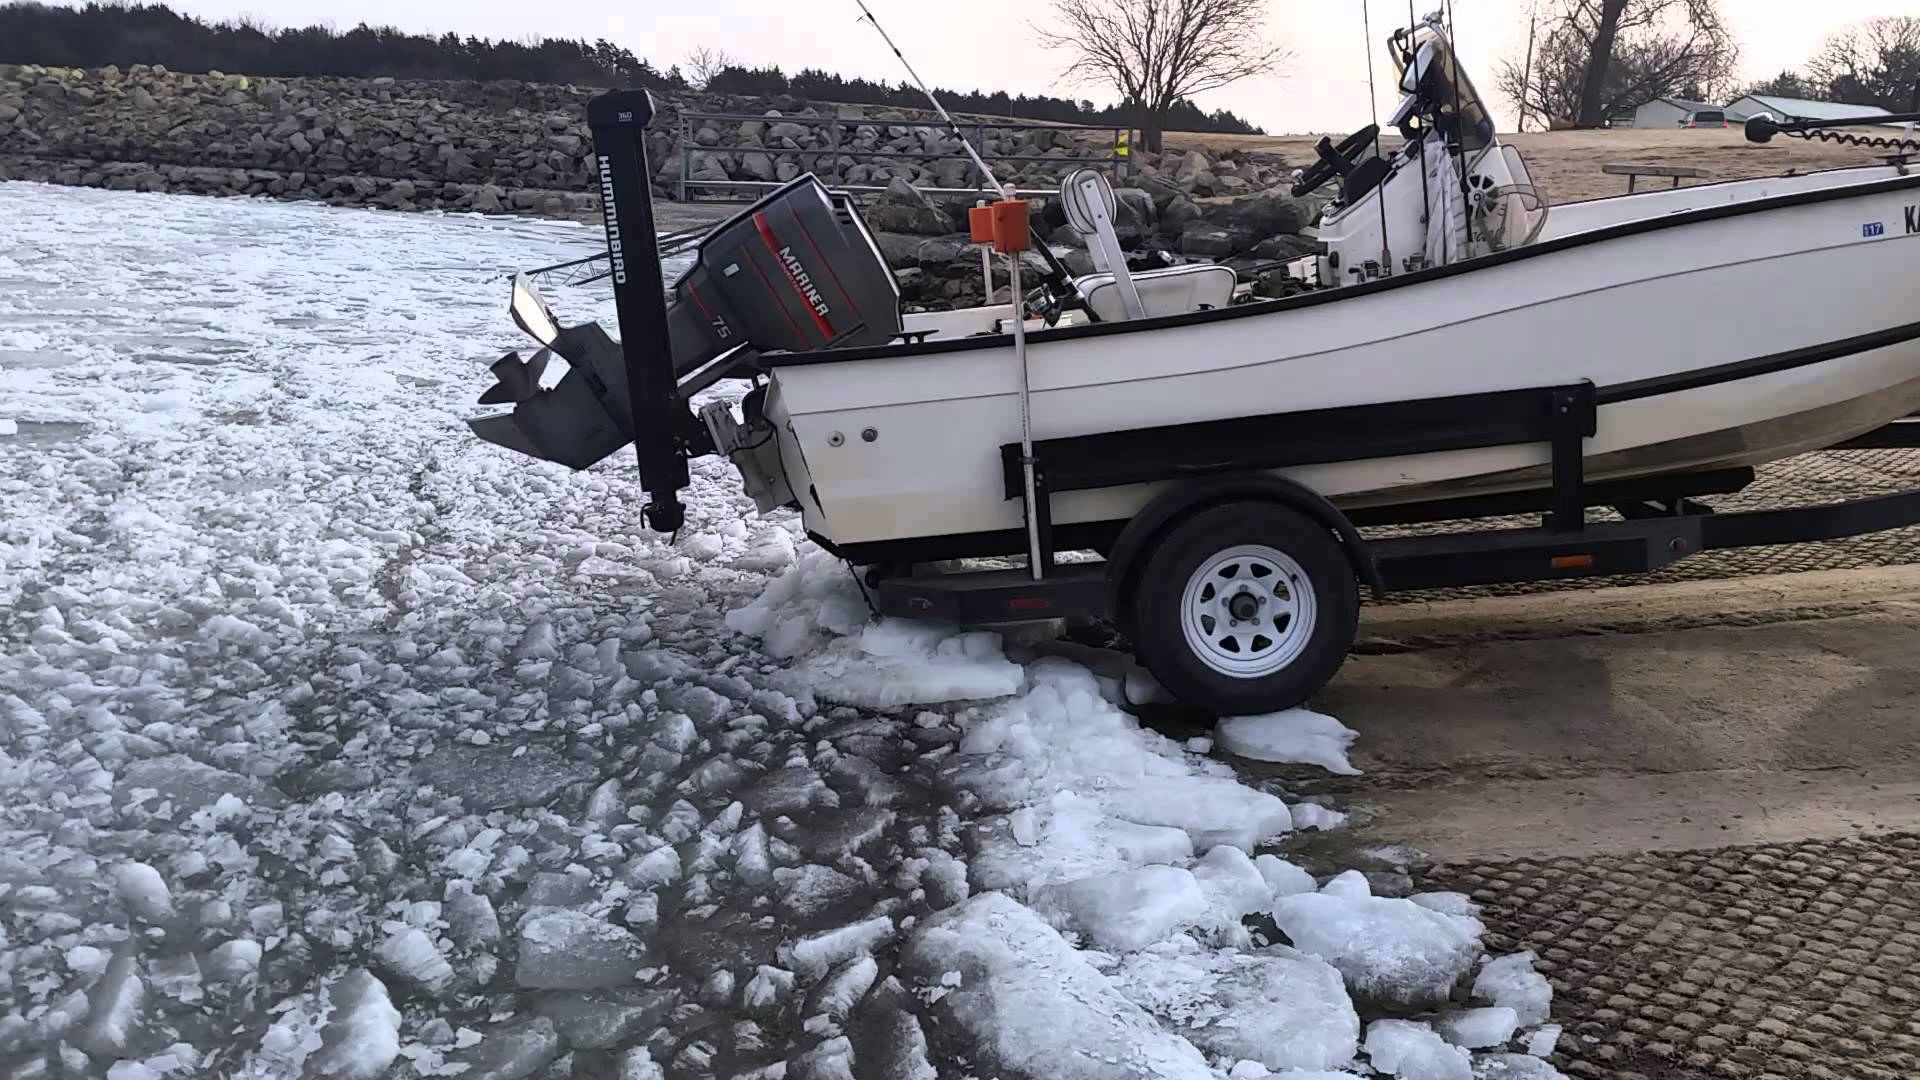 Frozen lake boat launch attempt. - YouTube